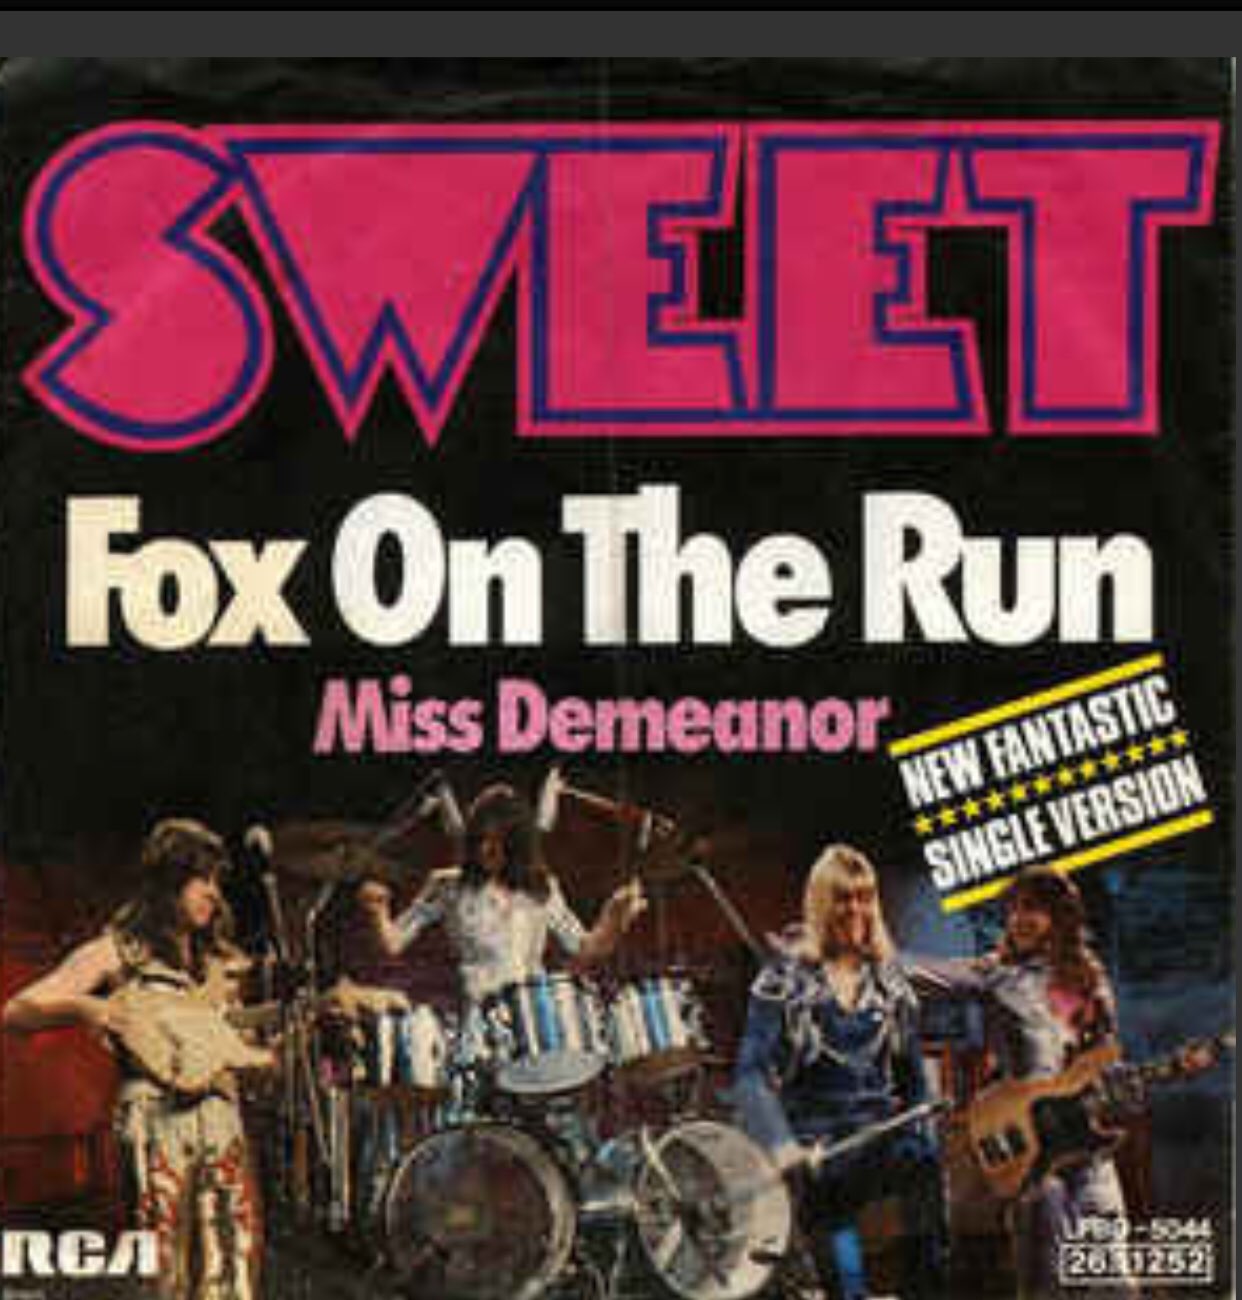 Sweet Fox On The Run from Desolation Blvd. Happy Birthday to surviving member Steve Priest 